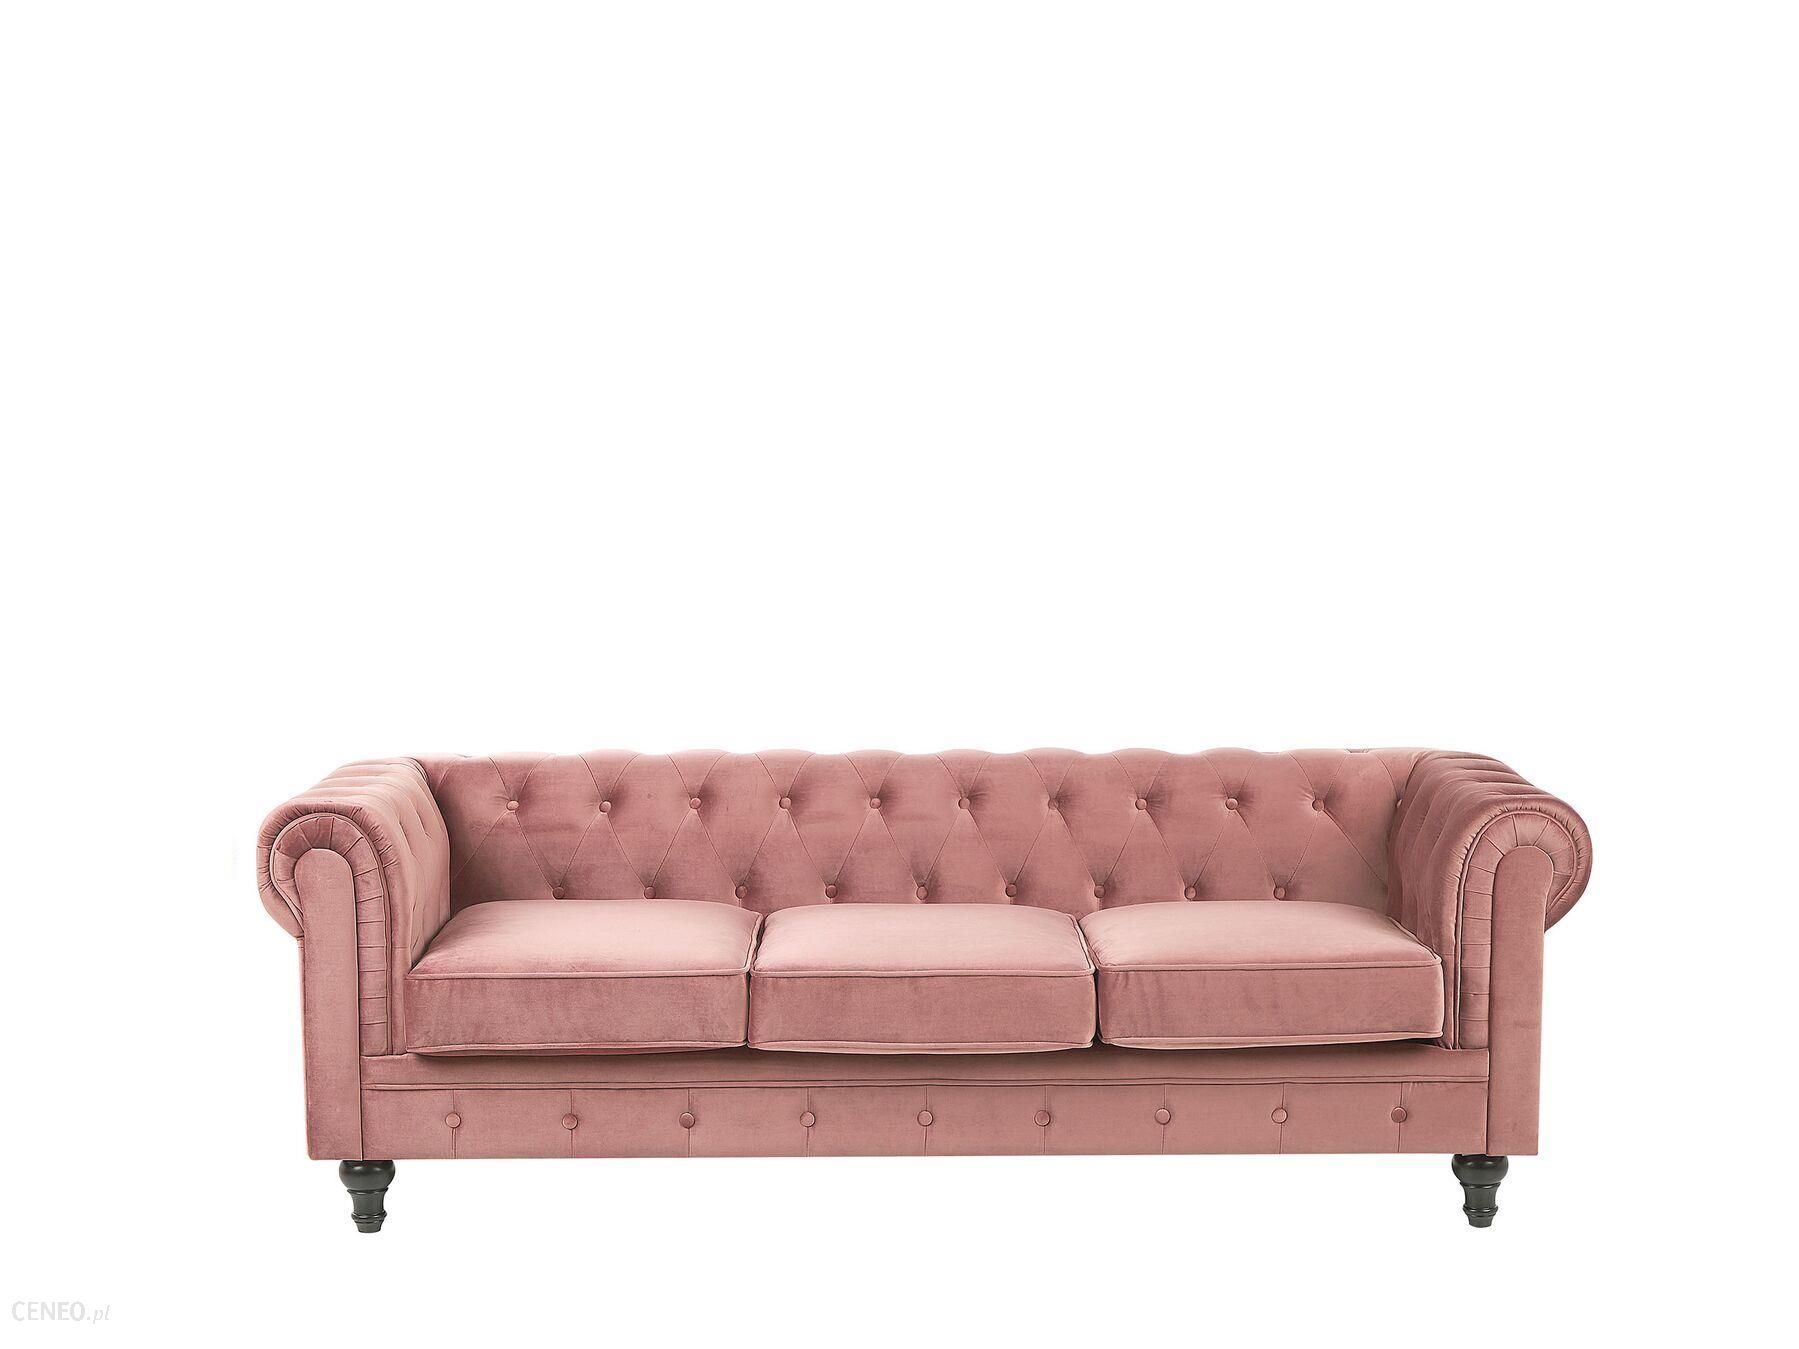 Sofa 3 Osobowa Welurowa Różowa Chesterfield